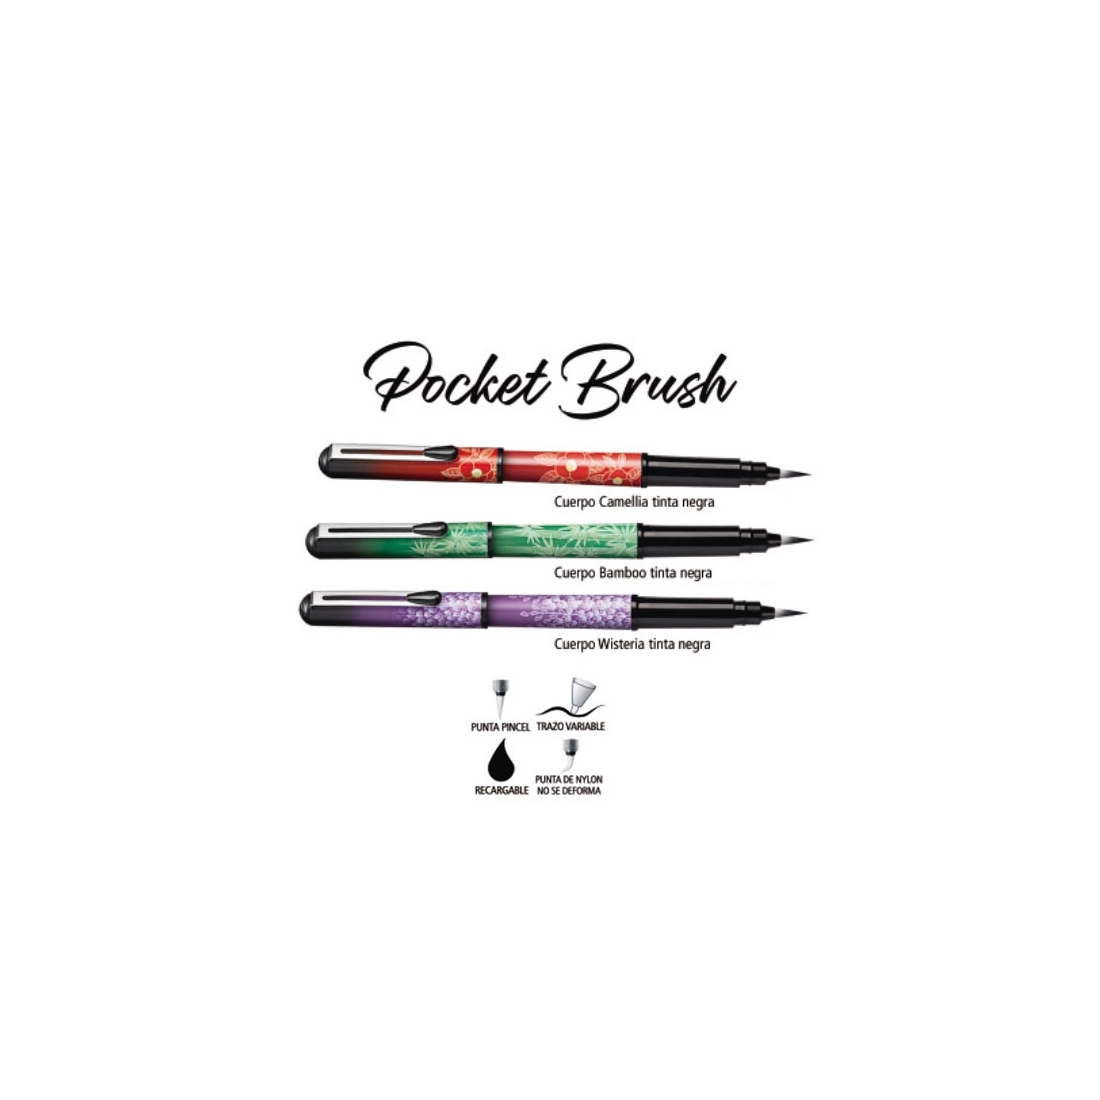 Pocket brush Pentel - Ed. limitada + 4 cartuchos